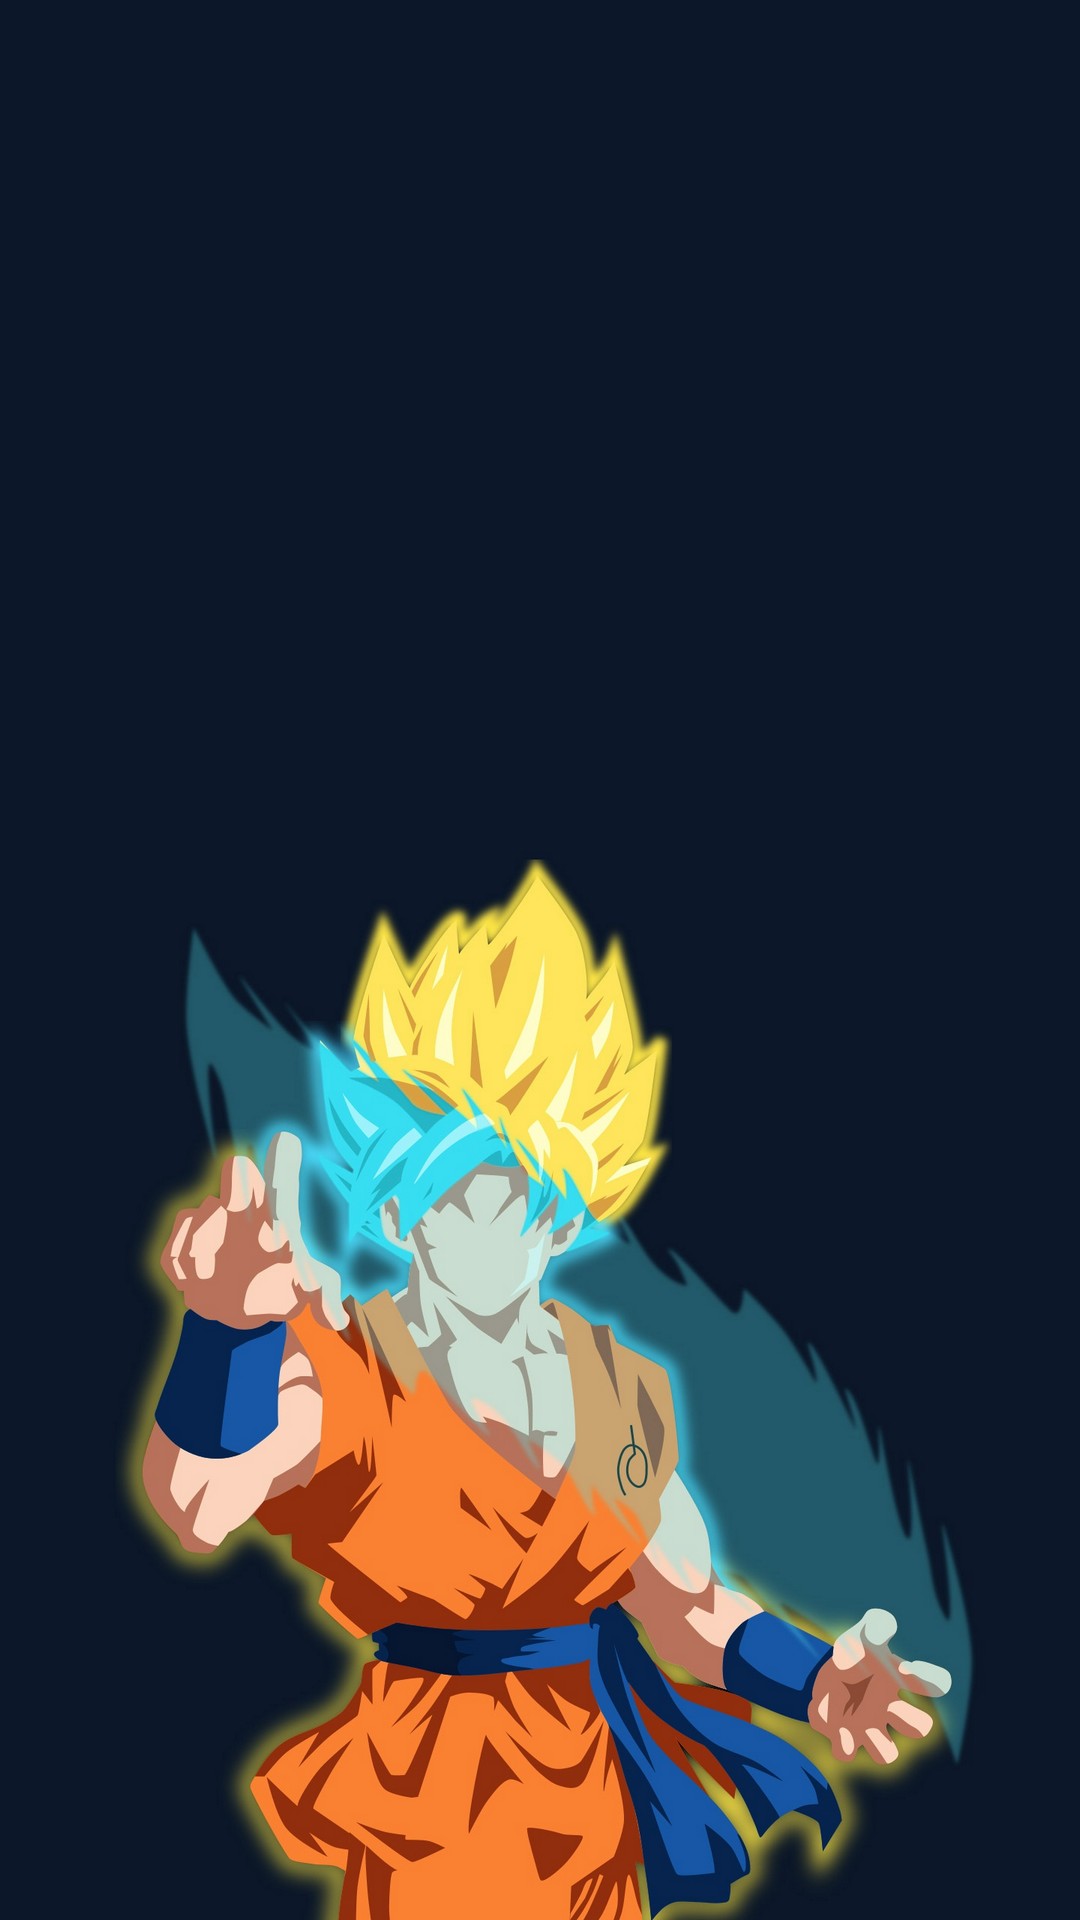 Wallpaper Android Goku Super Saiyan with HD resolution 1080x1920